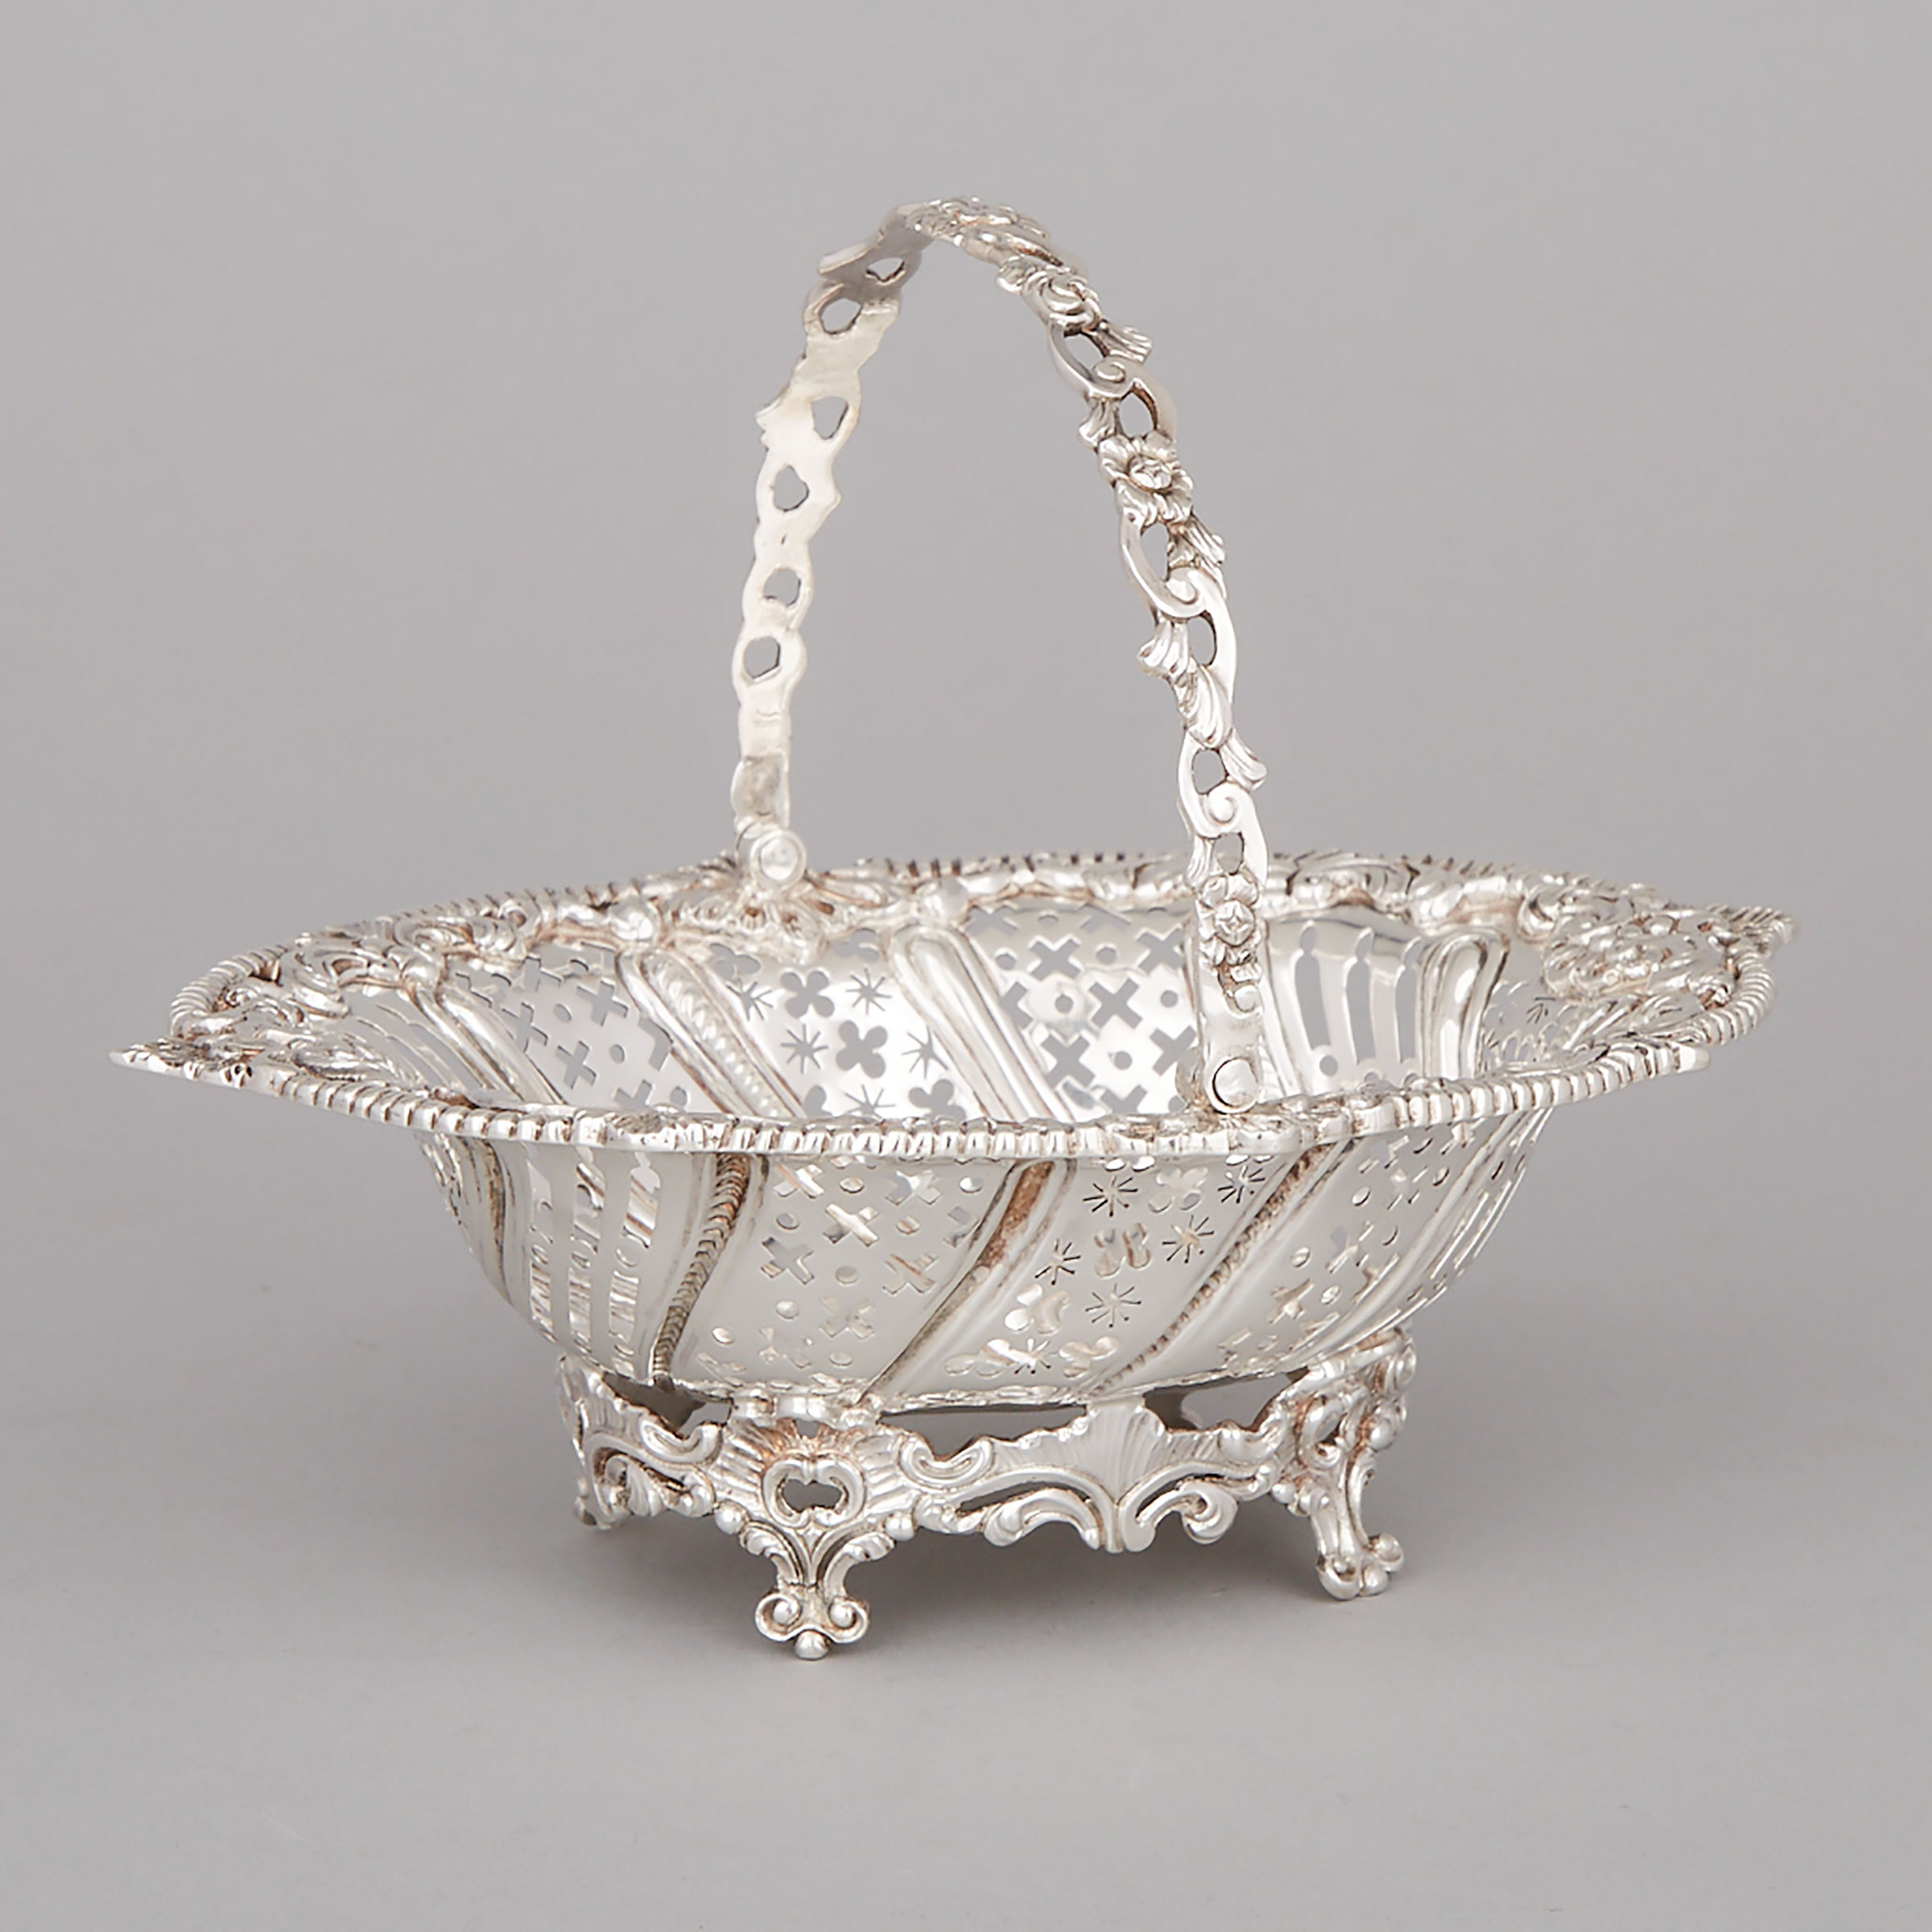 English Silver Pierced Basket, Goldsmiths & Silversmiths Co., London, 1913